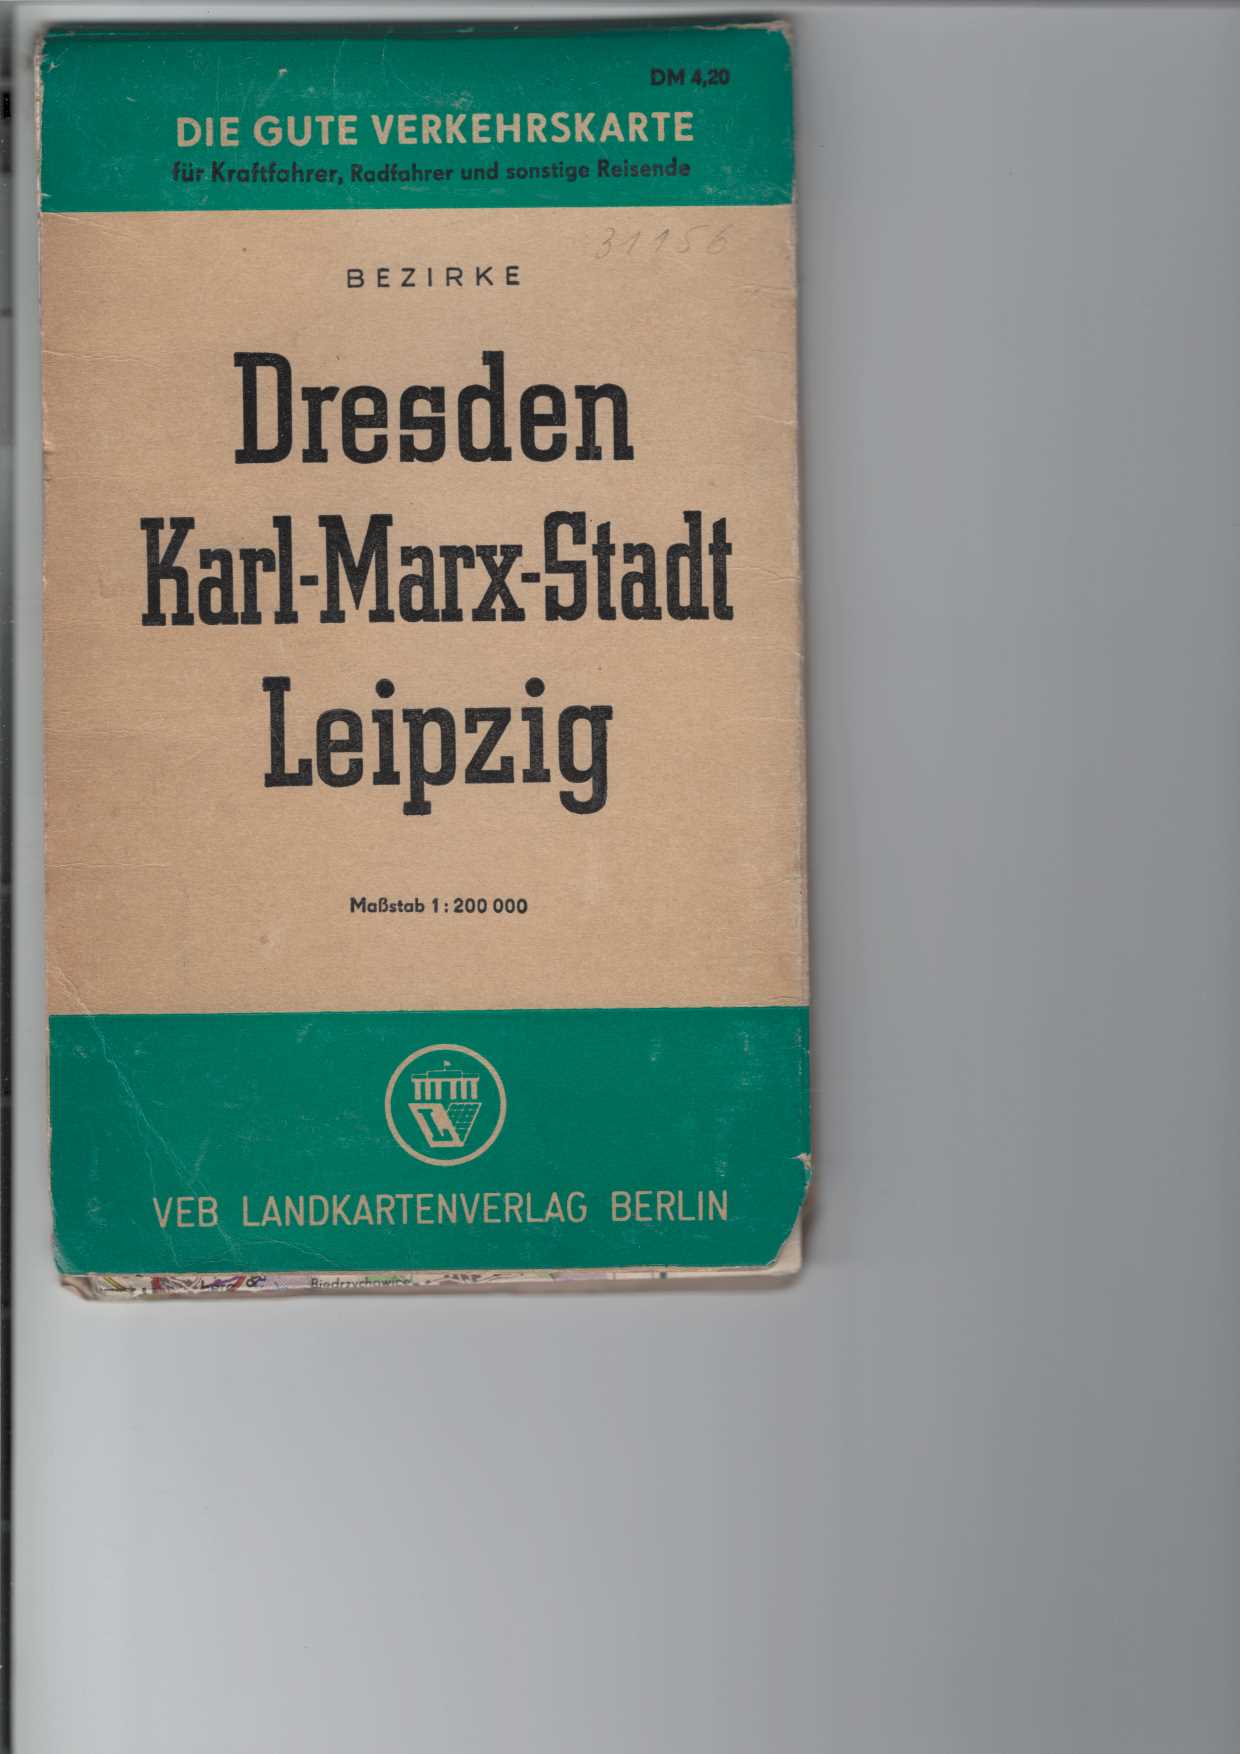   Bezirke Dresden - Karl-Marx-Stadt - Leipzig. 